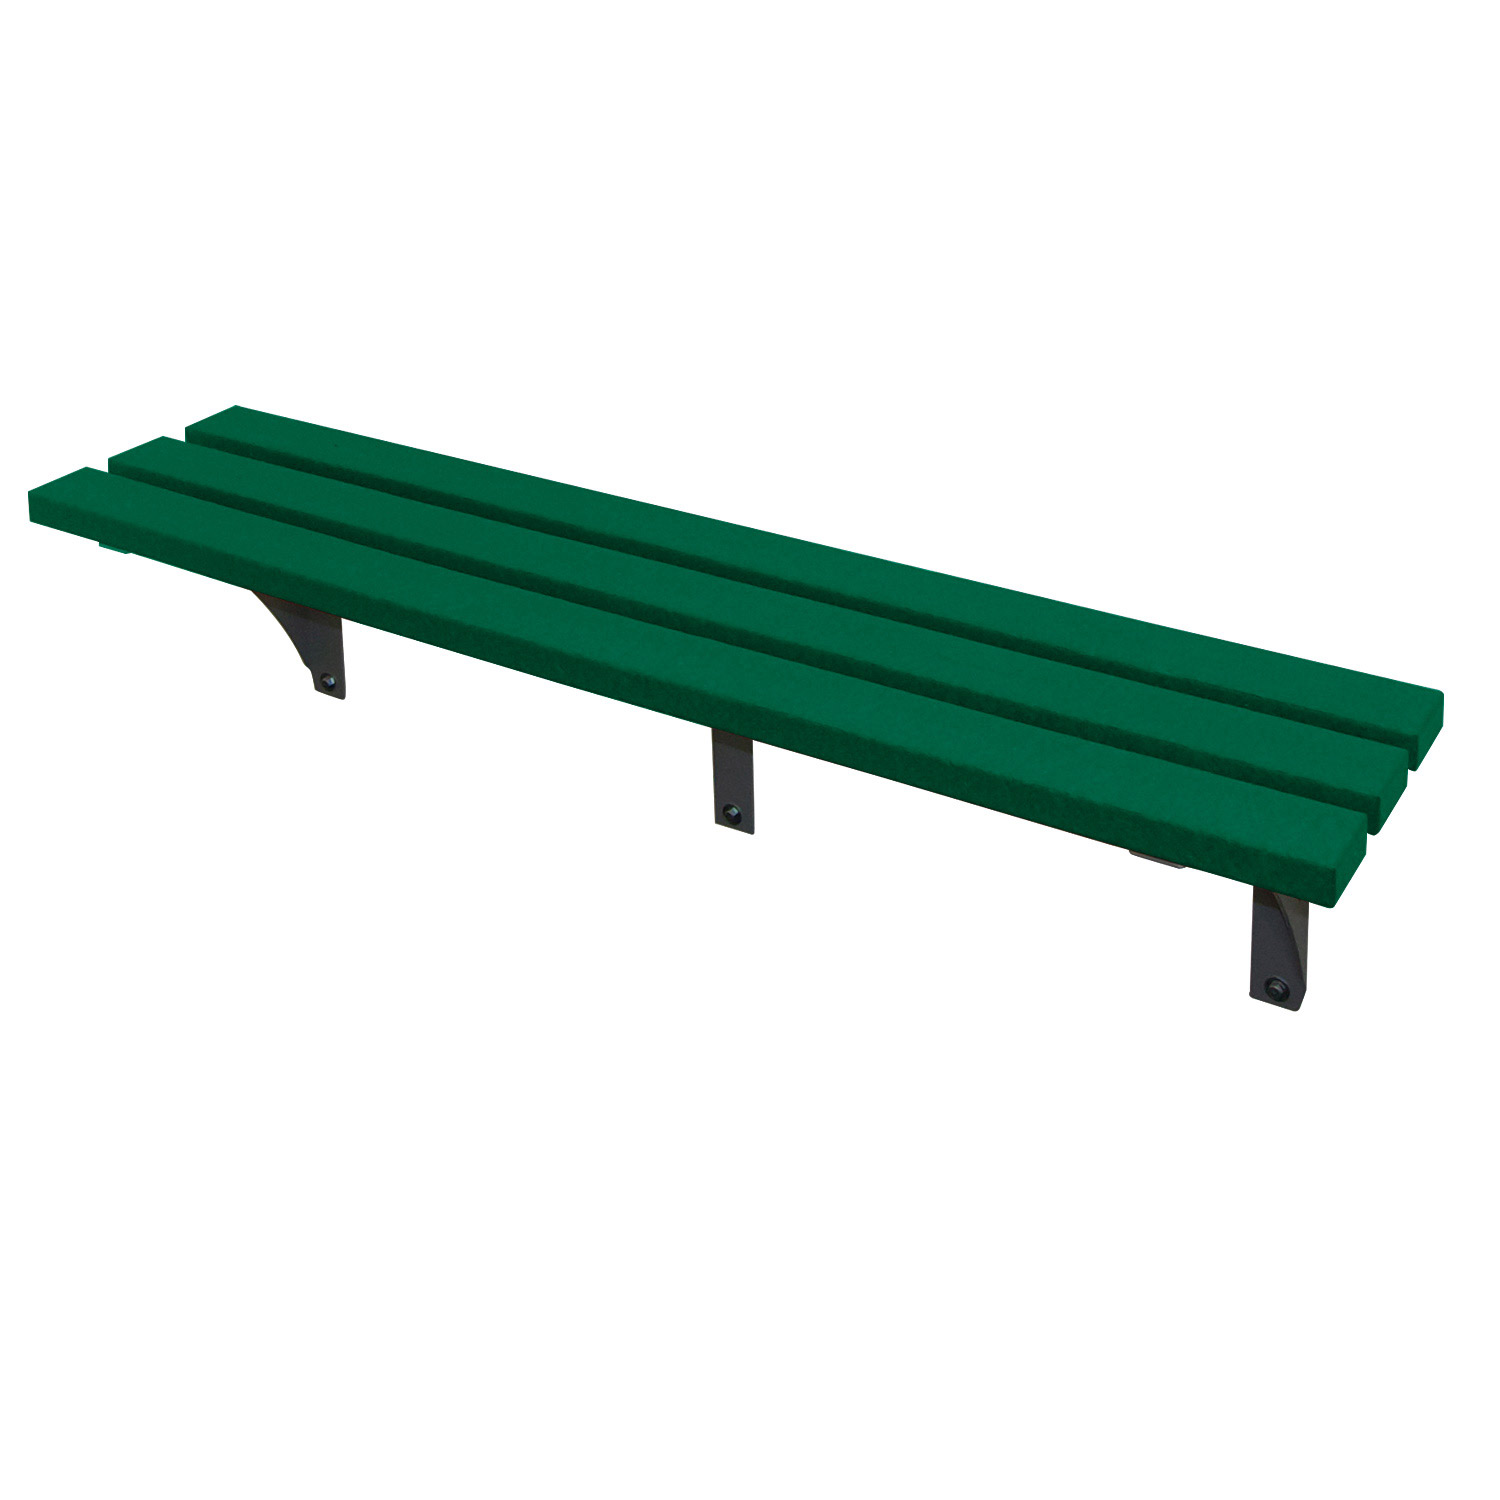 636638082805150548_green-bench-web.jpg